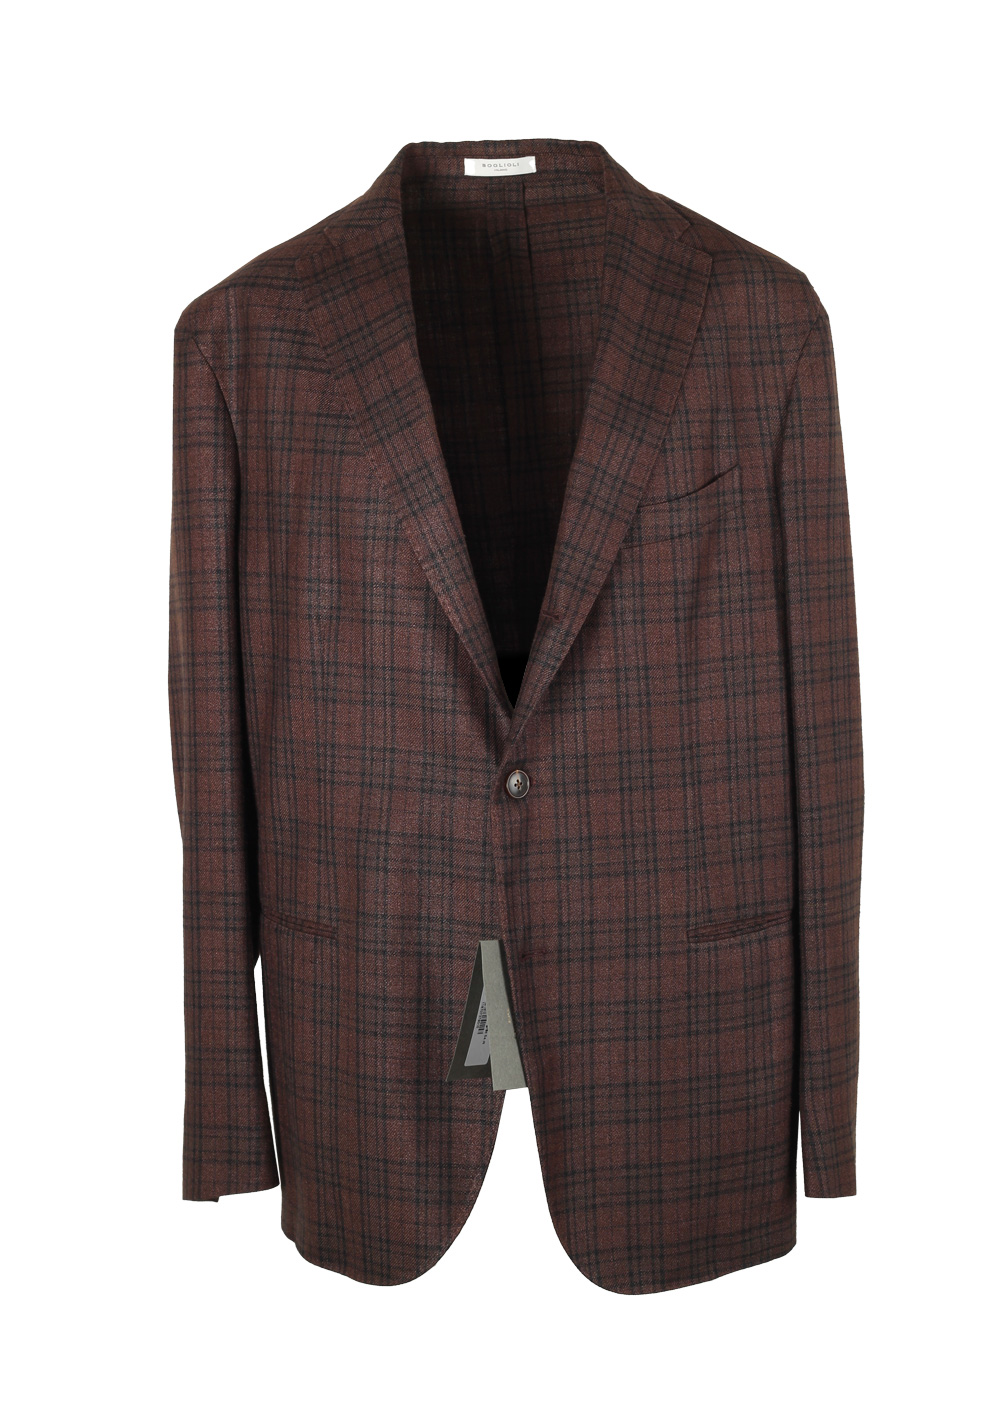 Boglioli K Jacket Brown Checked Sport Coat Size 54 / 44R U.S. | Costume Limité